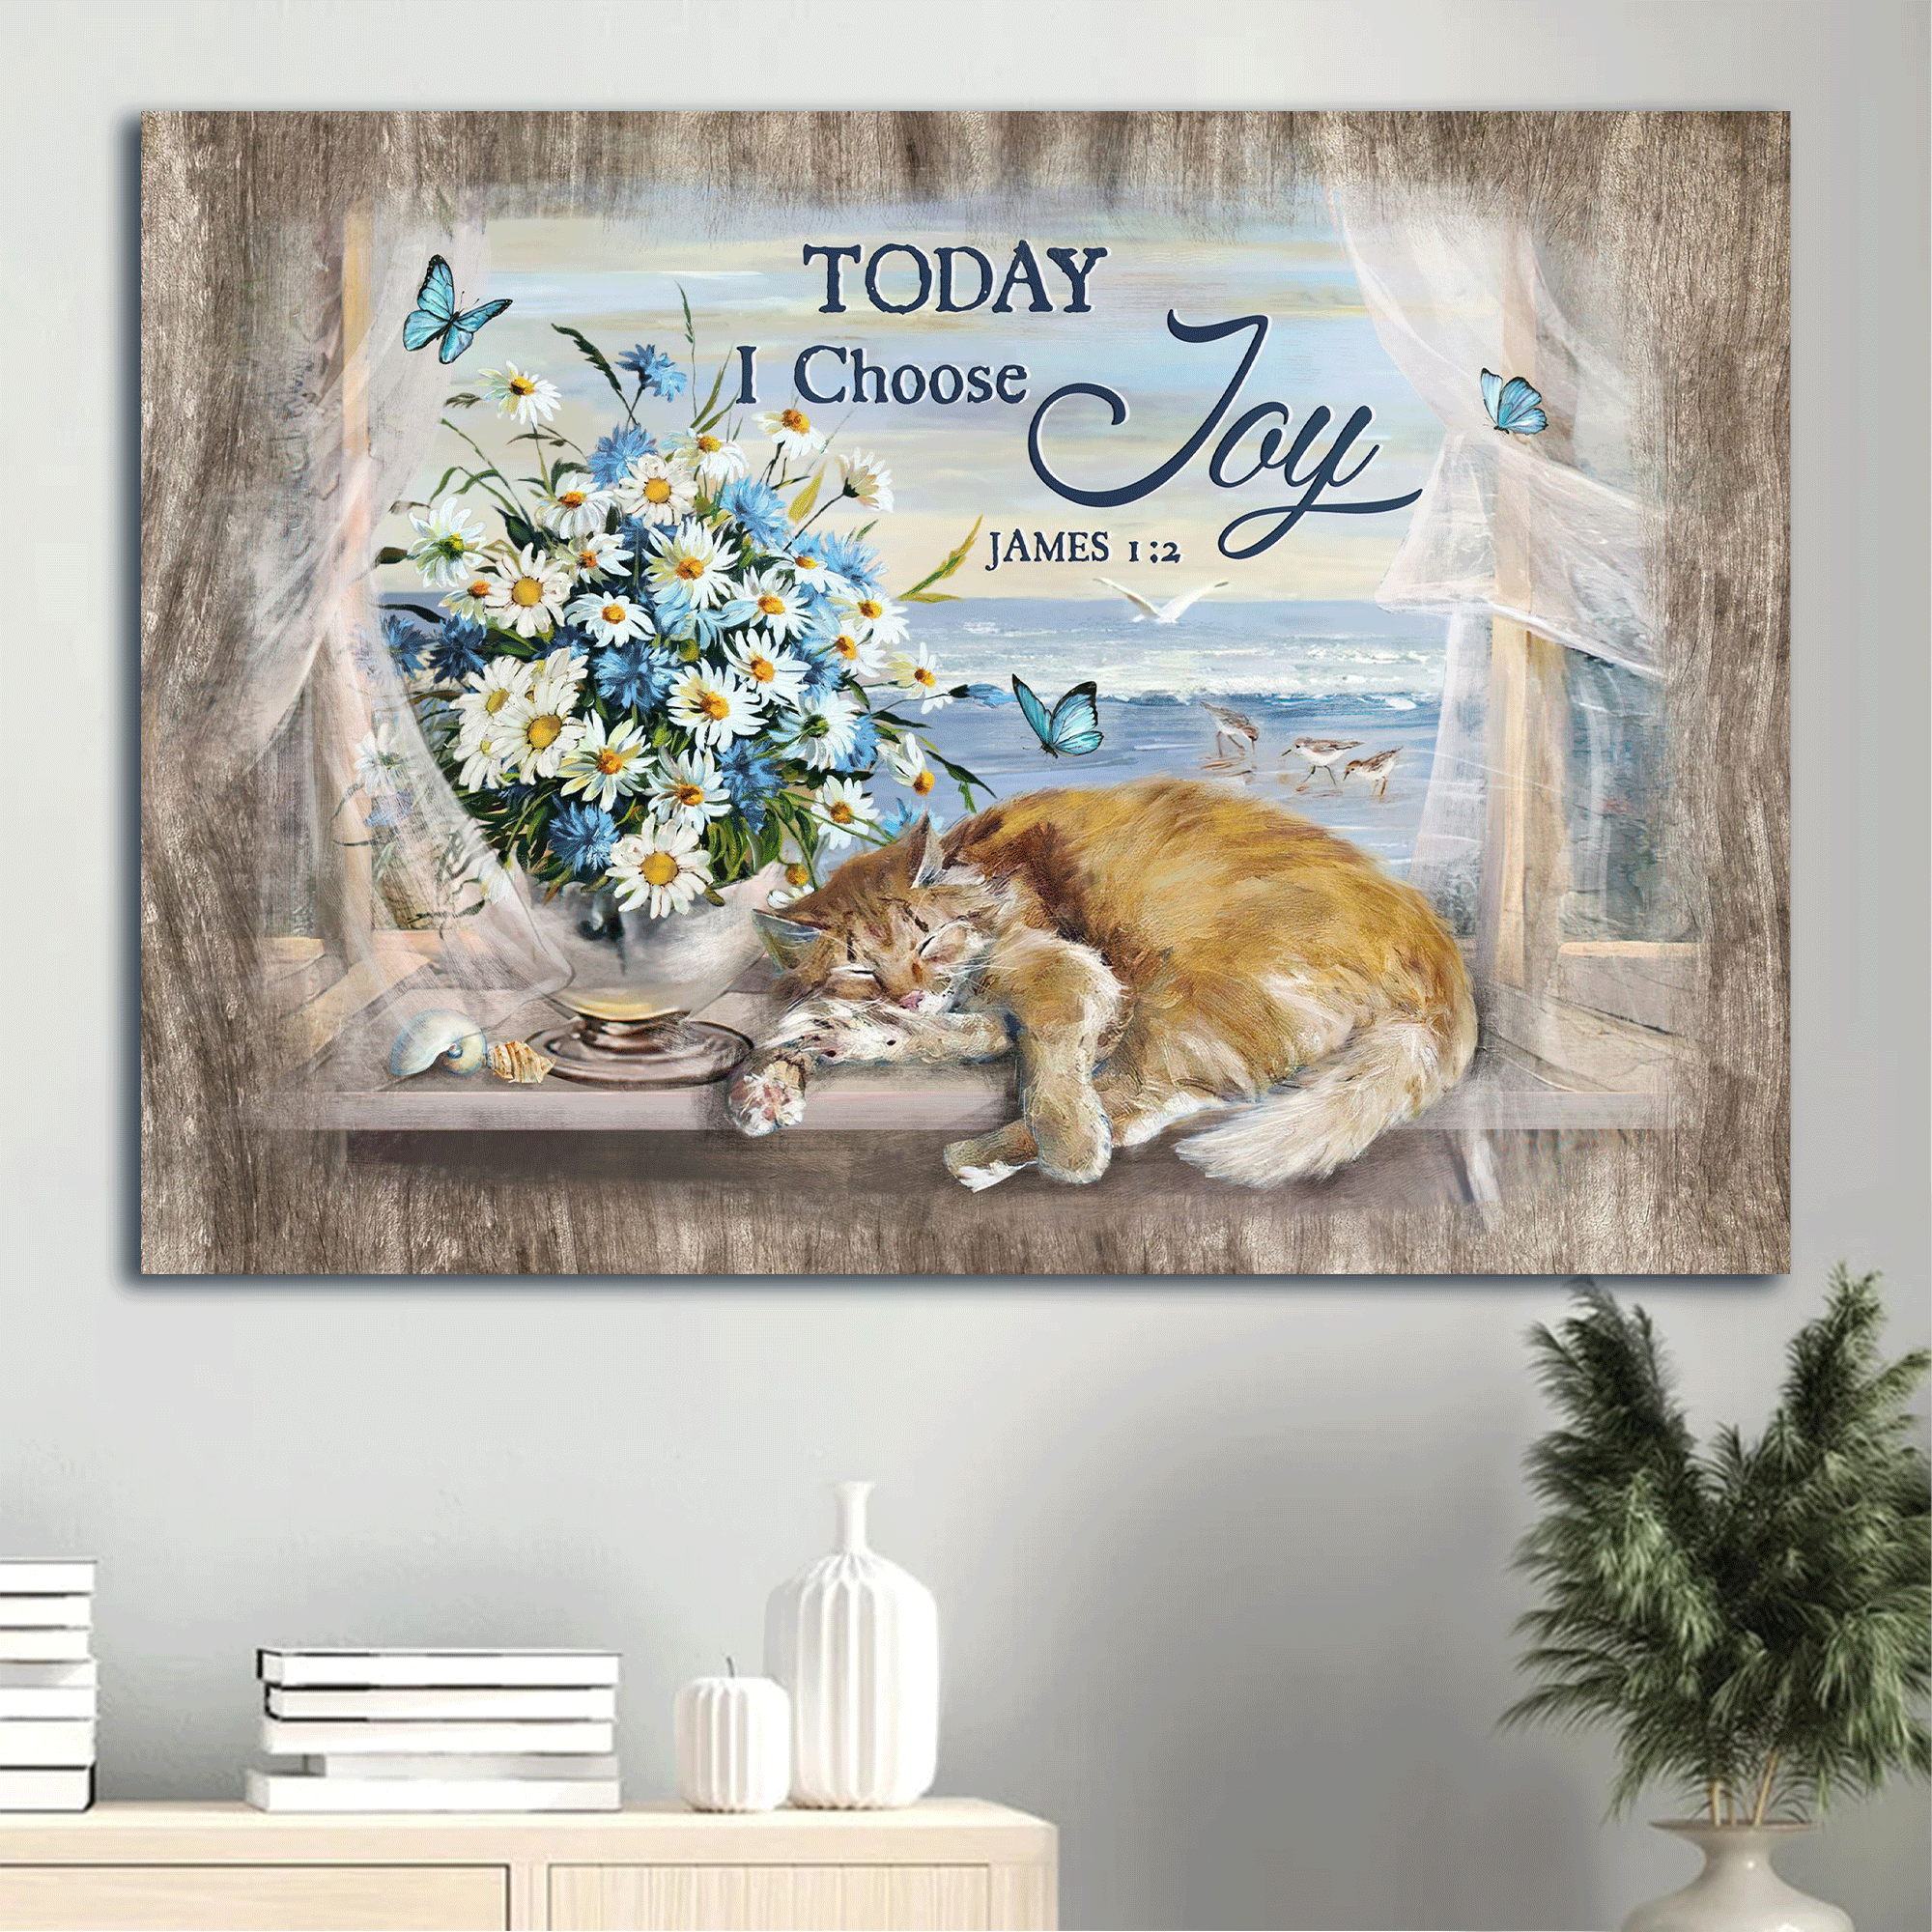 Jesus Landscape Canvas - Ocean painting, Sleeping cat, Daisy vase Landscape Canvas - Gift For Christian - Today I choose joy Landscape Canvas